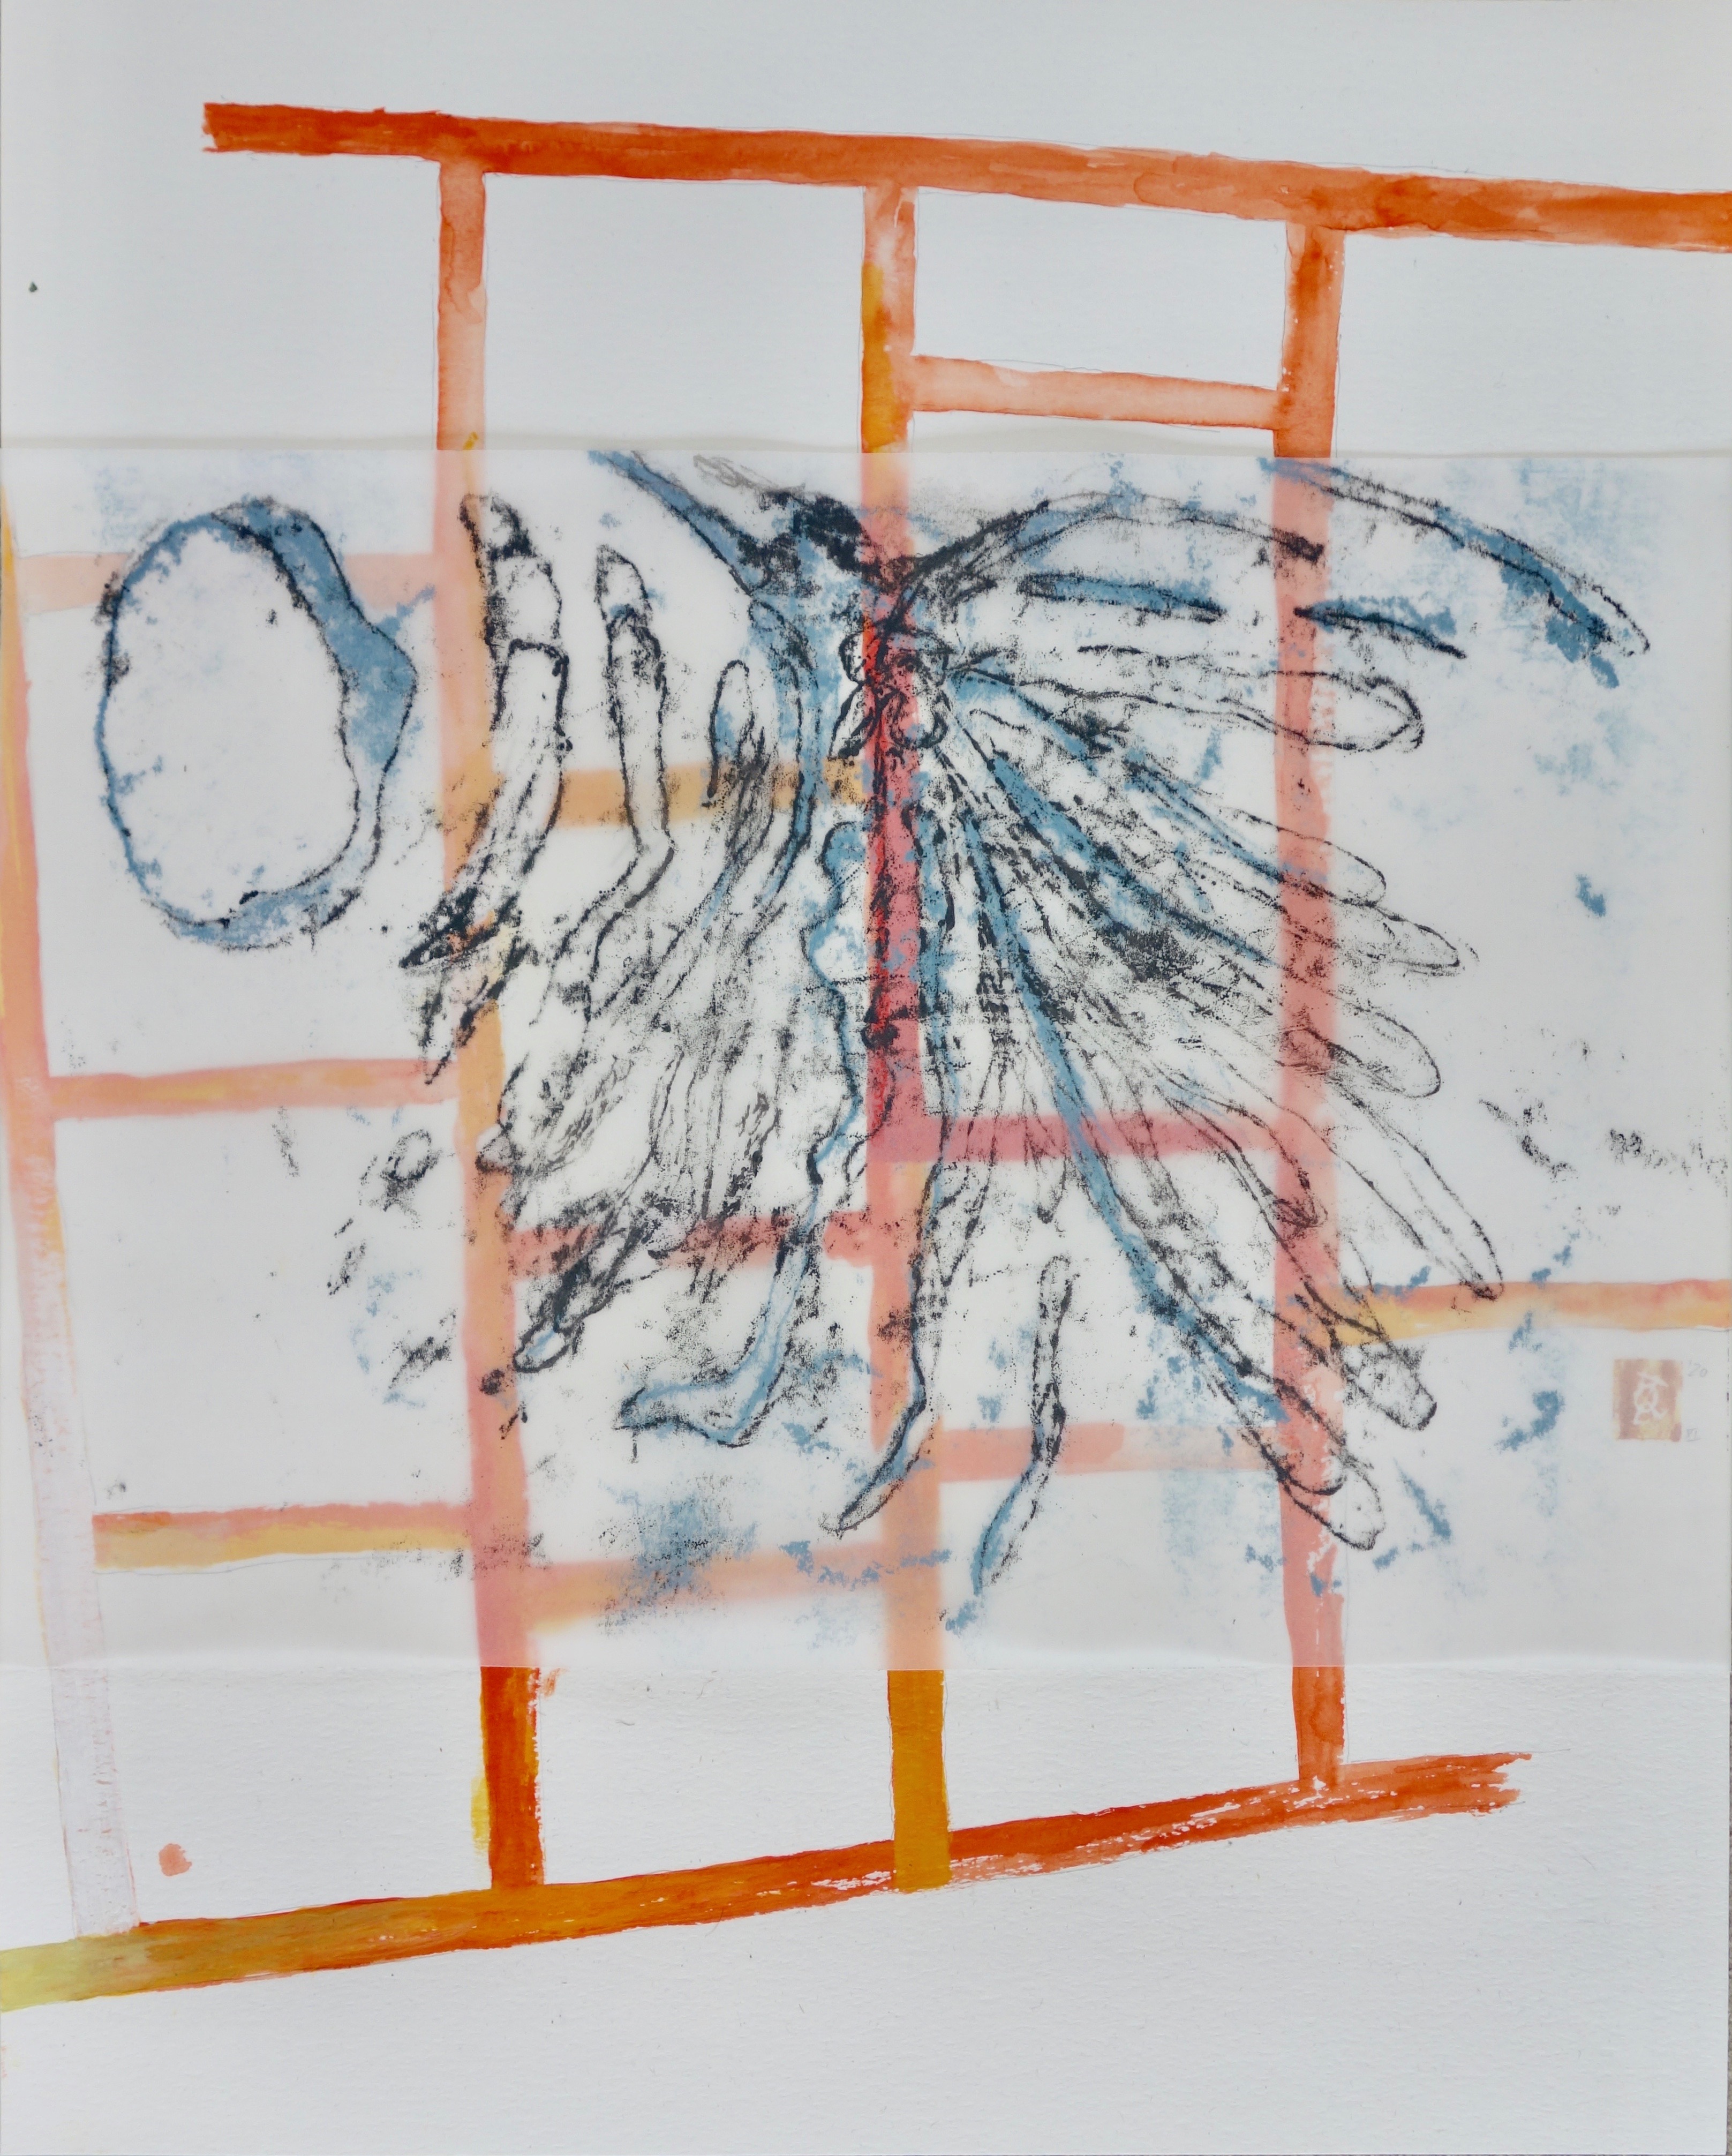 verso-recto XI, Verschiedene Materialien auf Papier, 50 x 40 cm, 2020, Erwin Holl